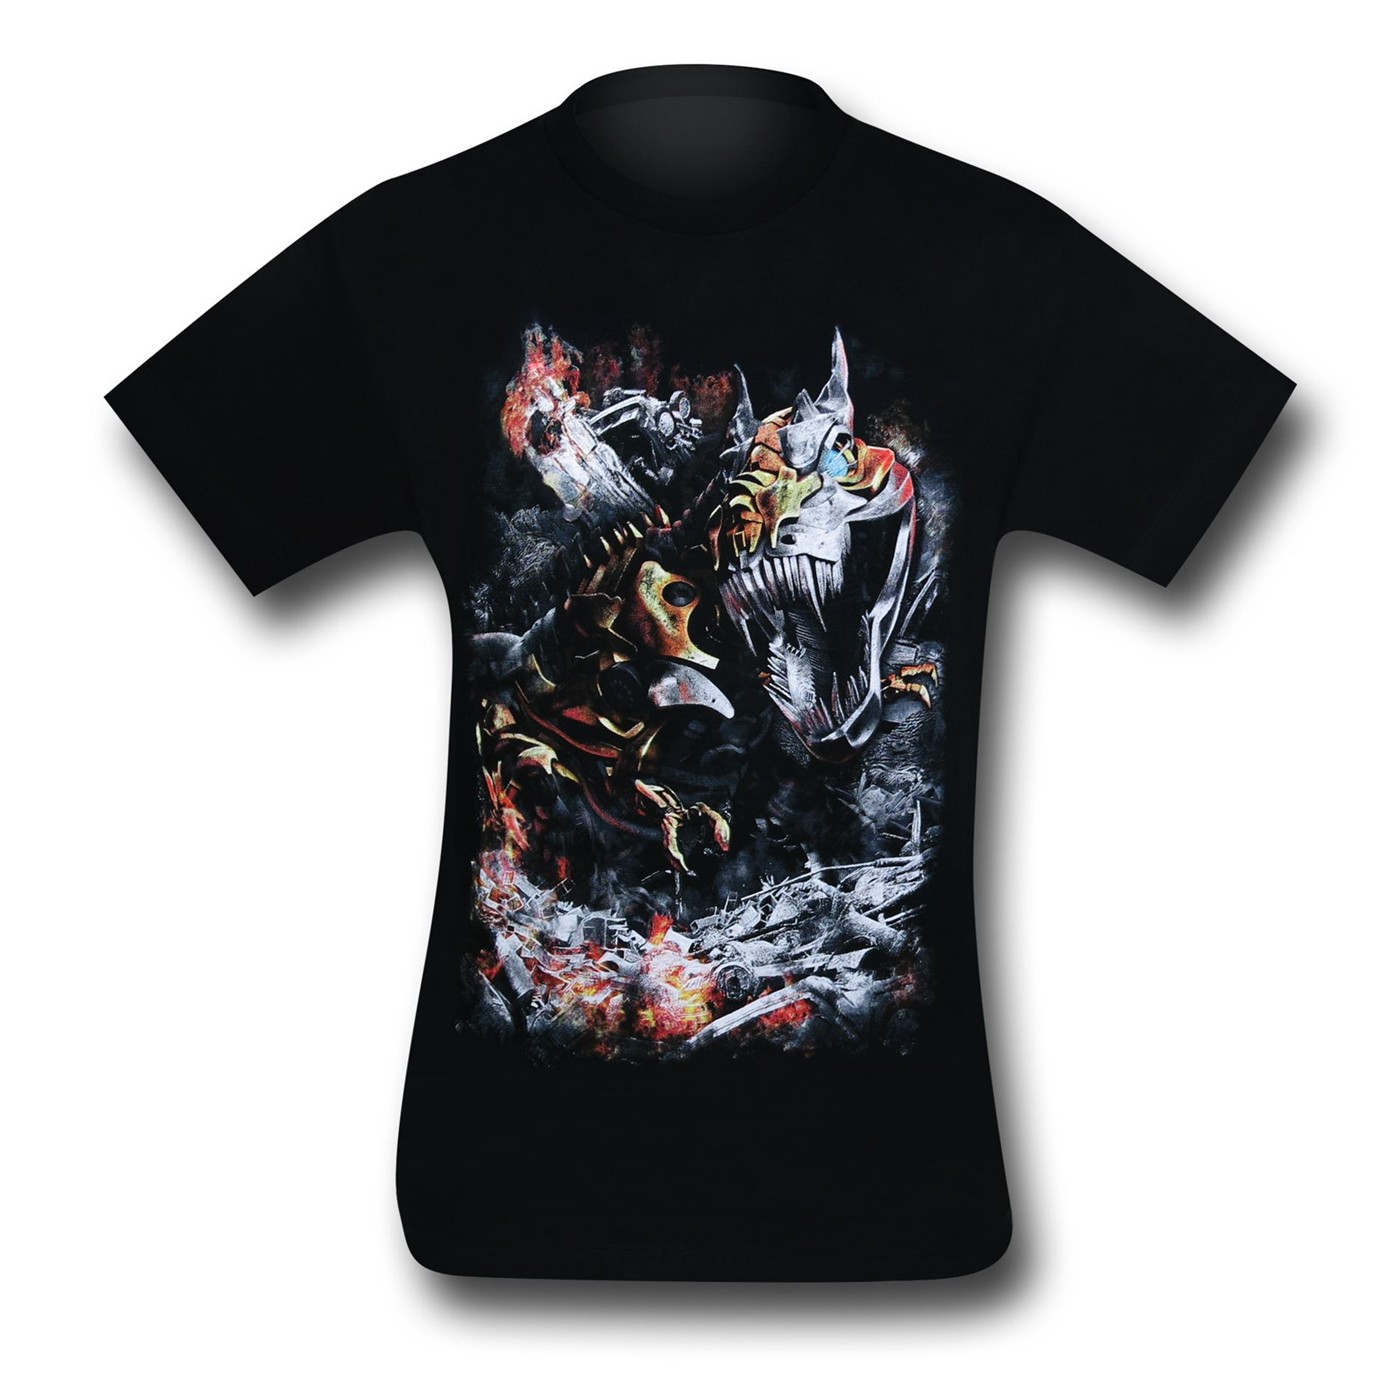 Transformers 4 Grimlock on Black T-Shirt